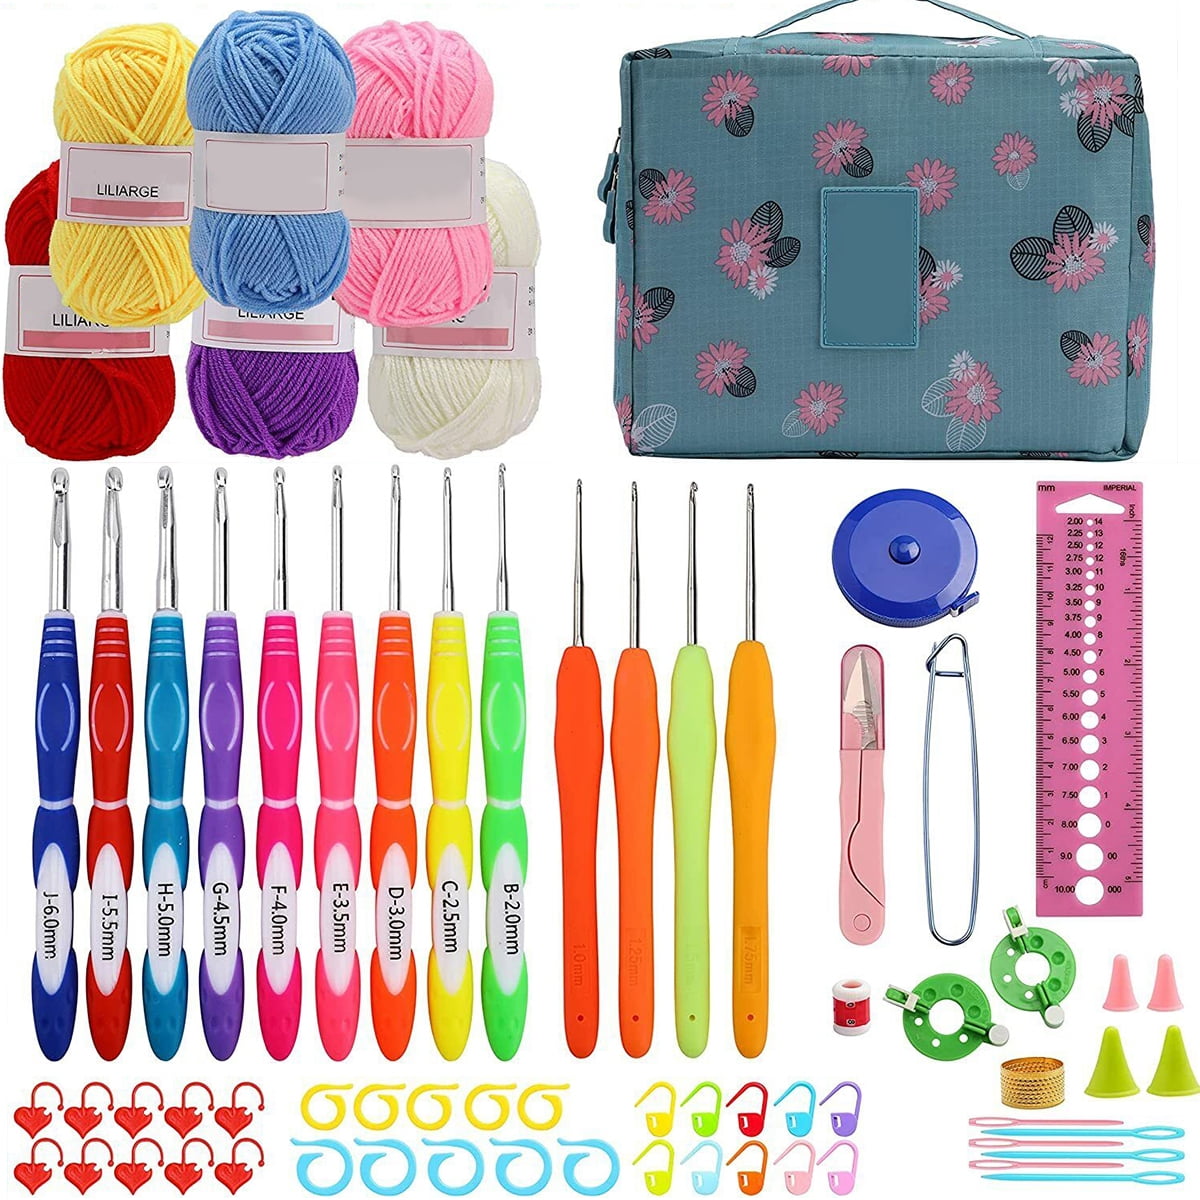 Retrok 82pcs Crochet Kits for Beginners Colorful Crochet Hook Set with Storage Bag and Crochet Accessories Ergonomic Crochet Kit Practical Knitting